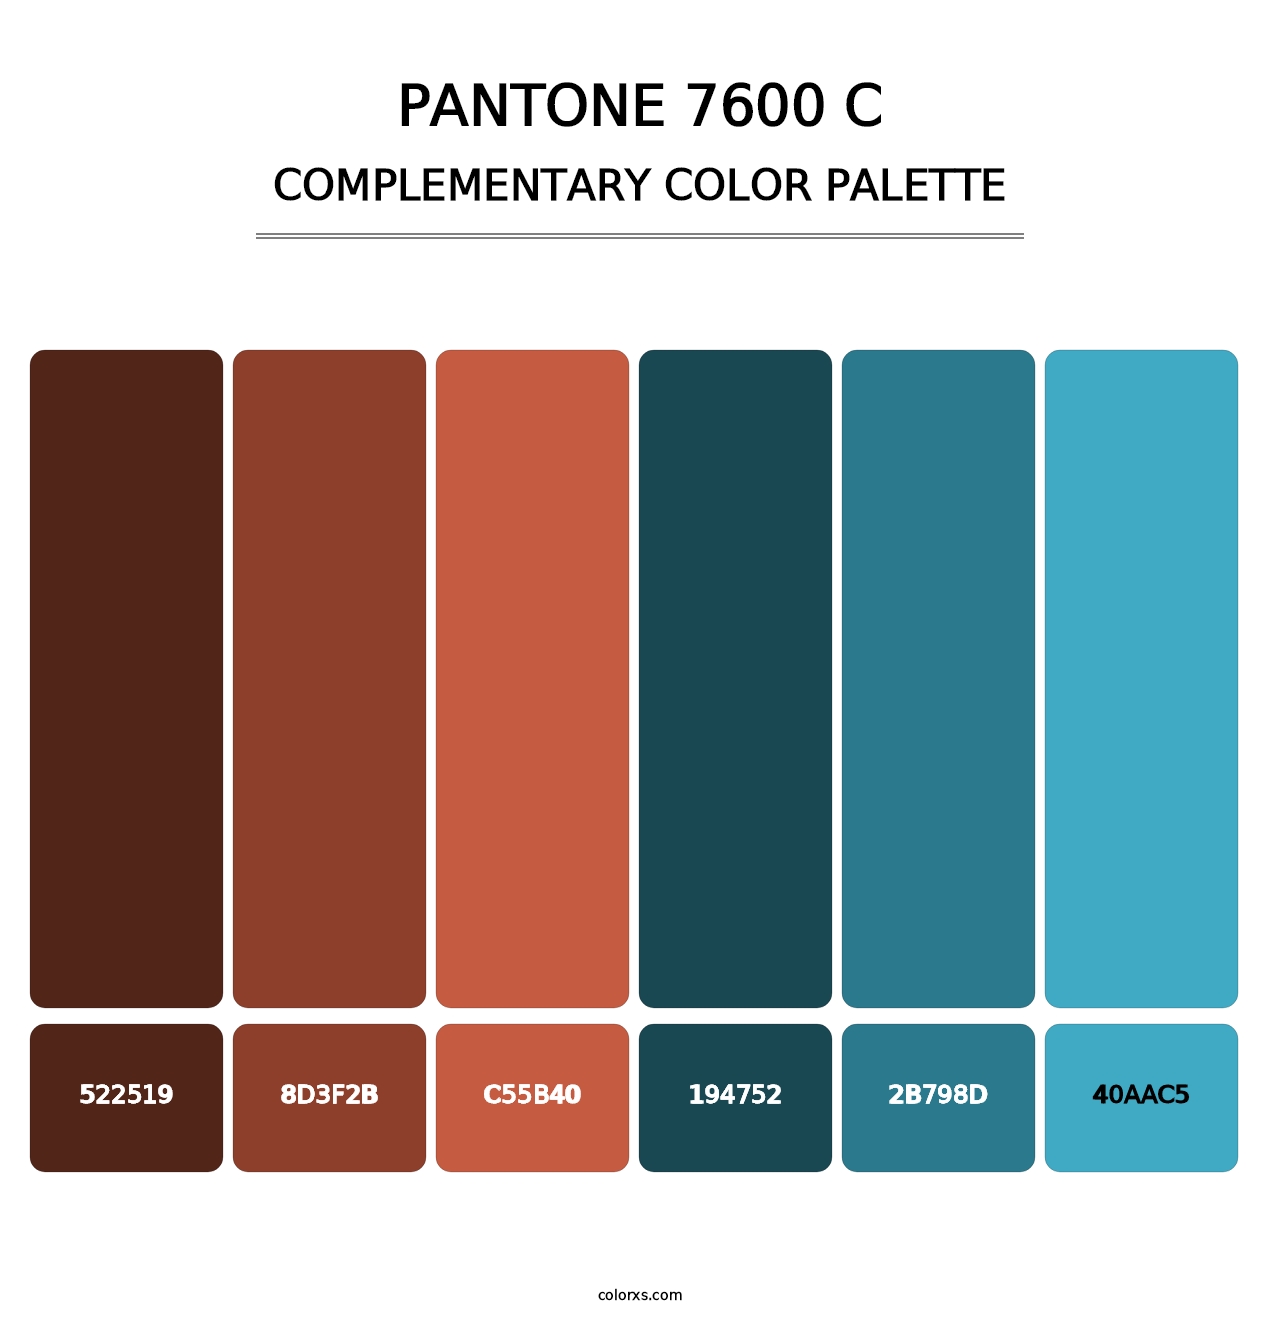 PANTONE 7600 C - Complementary Color Palette